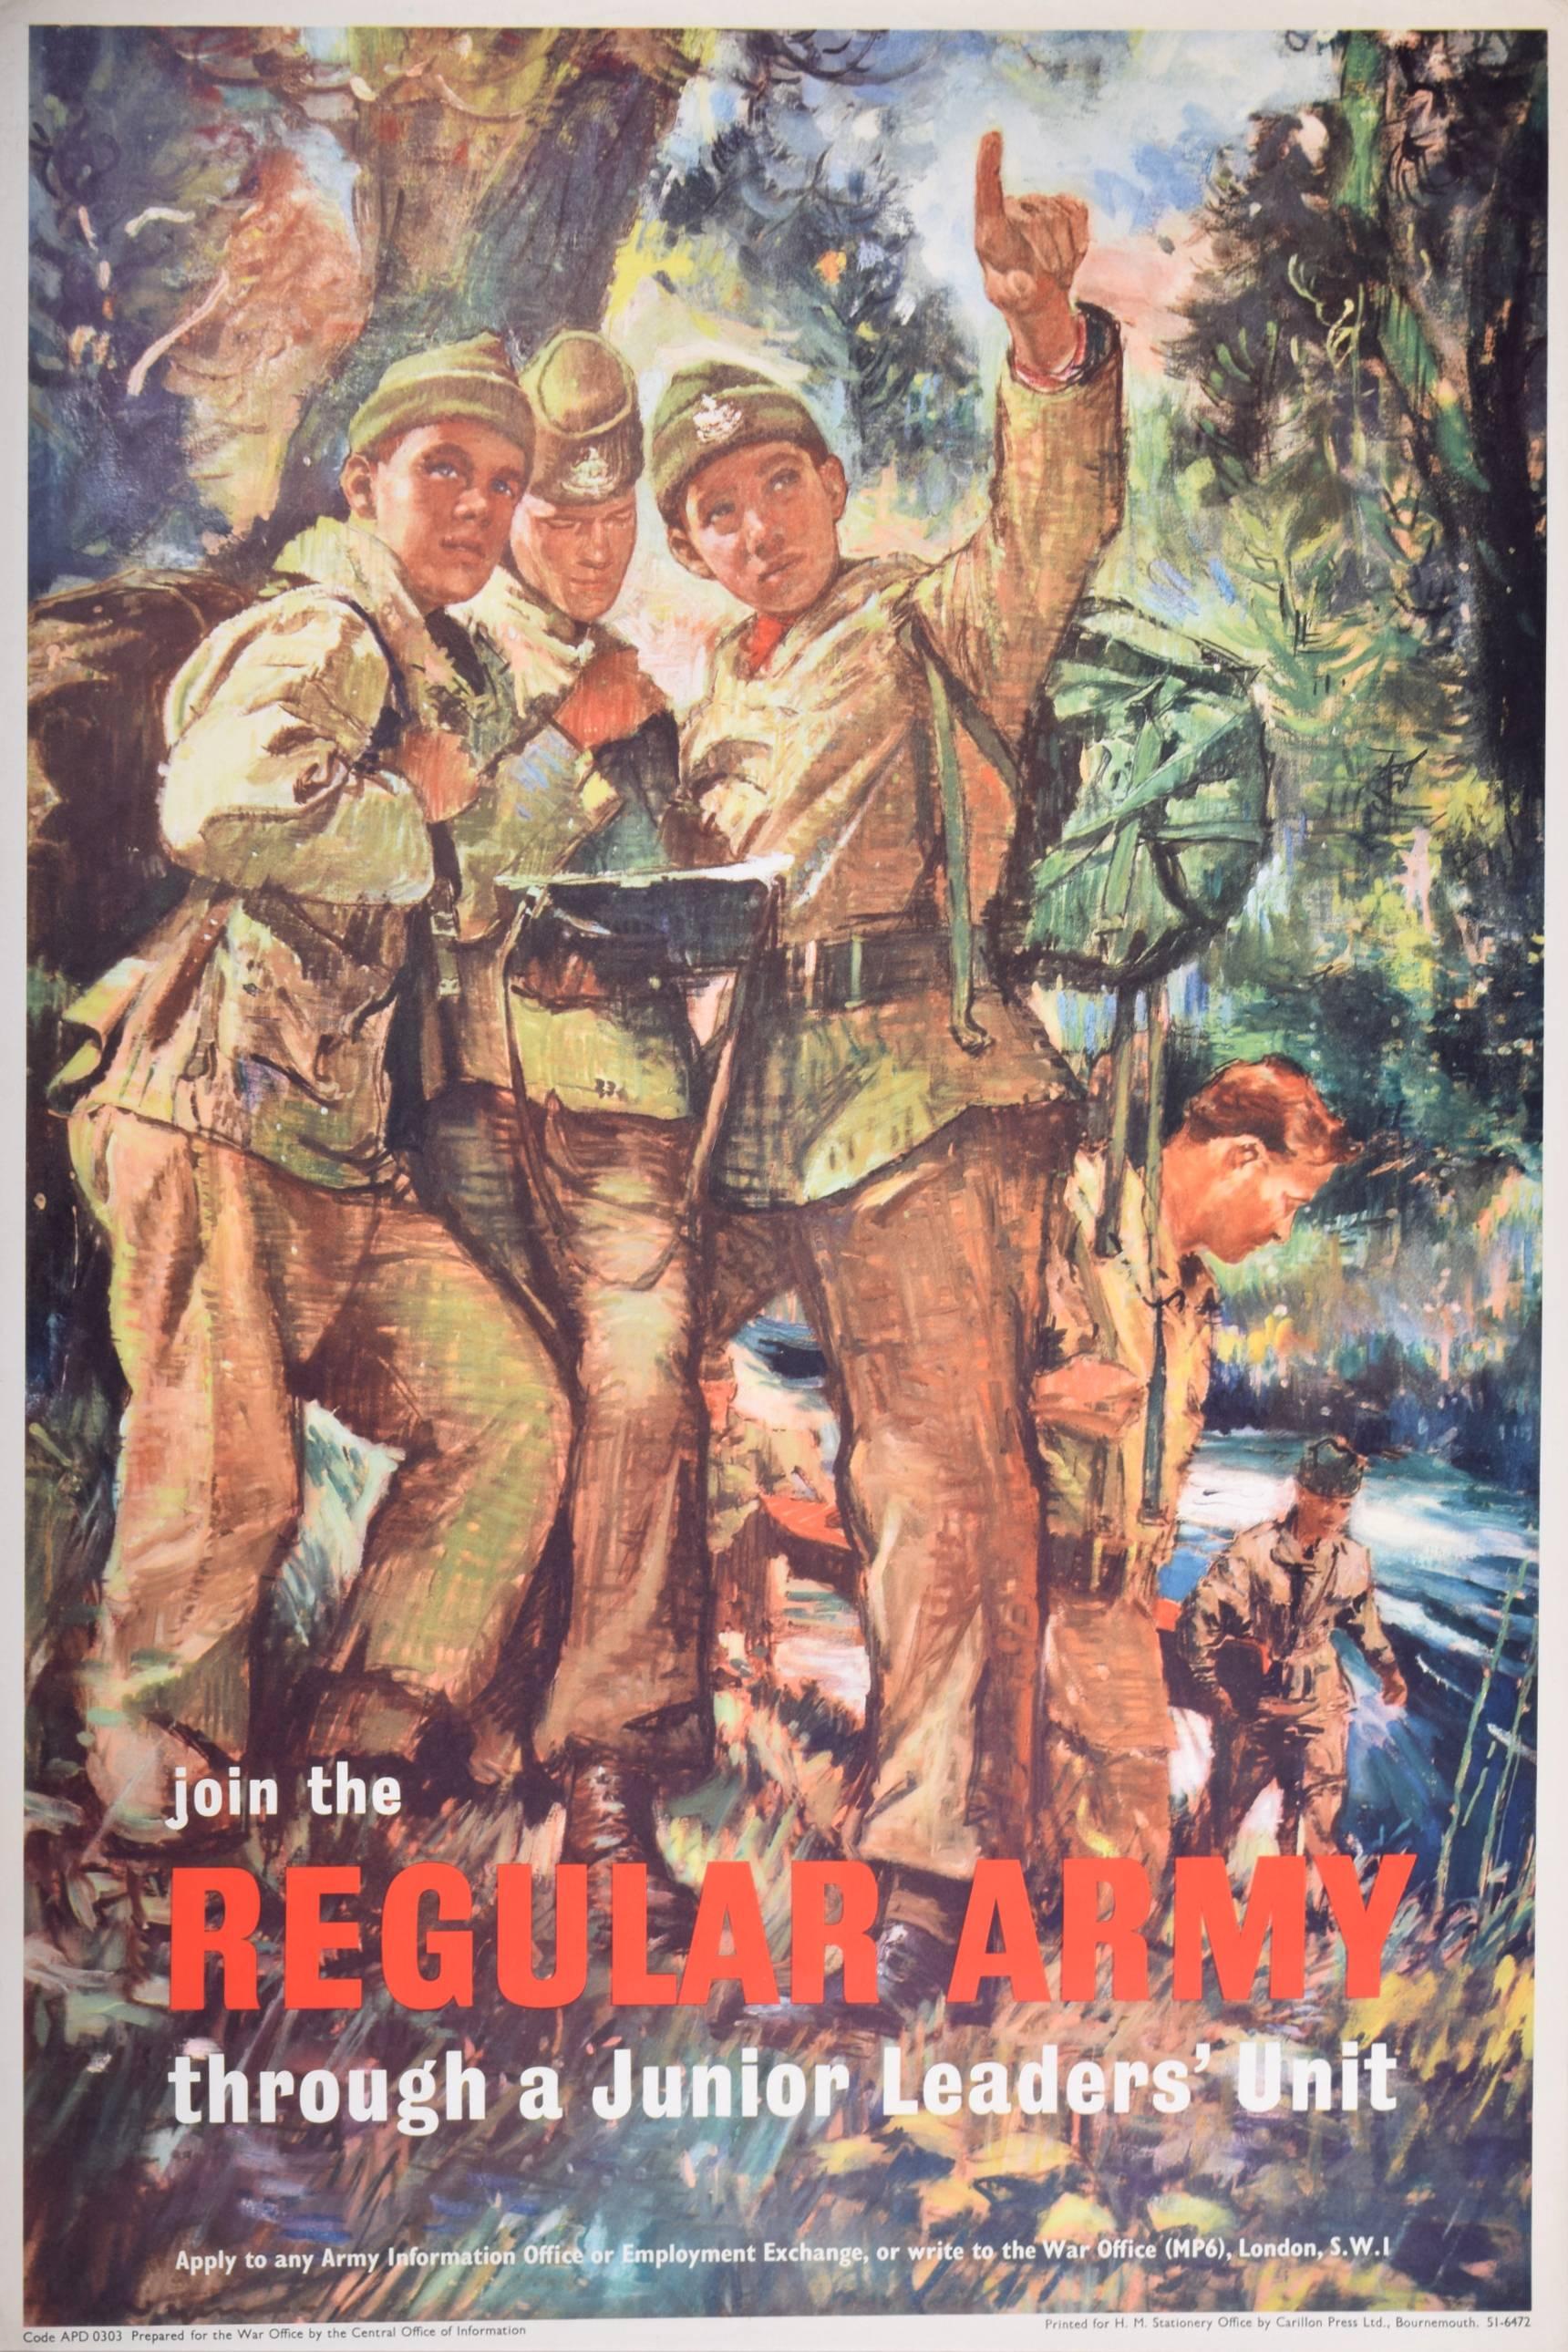 John Godfrey Bernard Worsley  Print - 1960s UK Army Recruitment poster, Join the Regular Army Junior Leaders' Unit